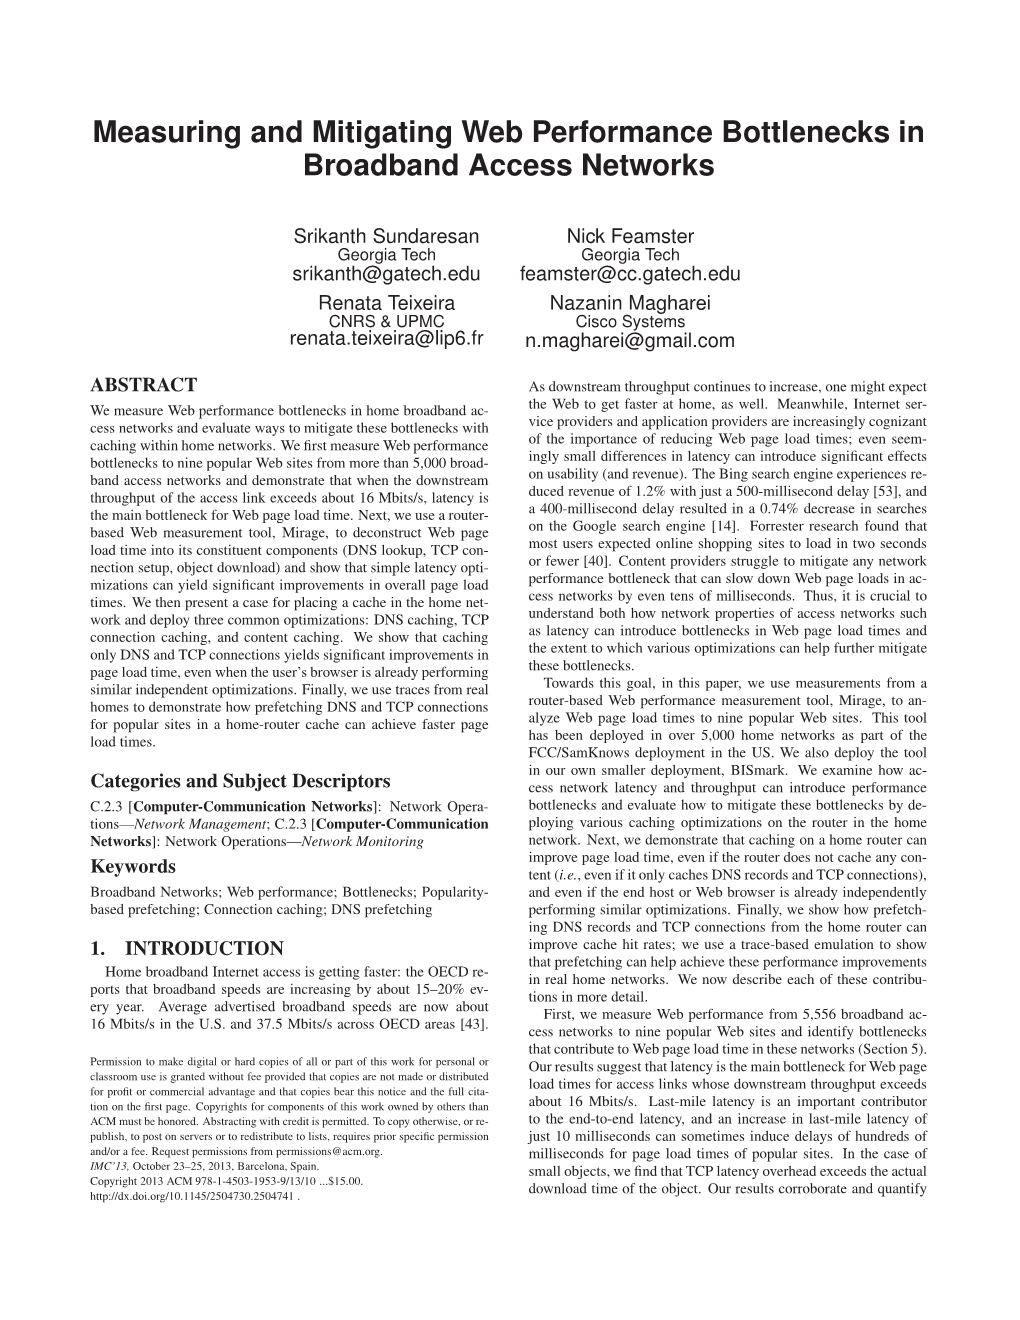 Measuring and Mitigating Web Performance Bottlenecks in Broadband Access Networks